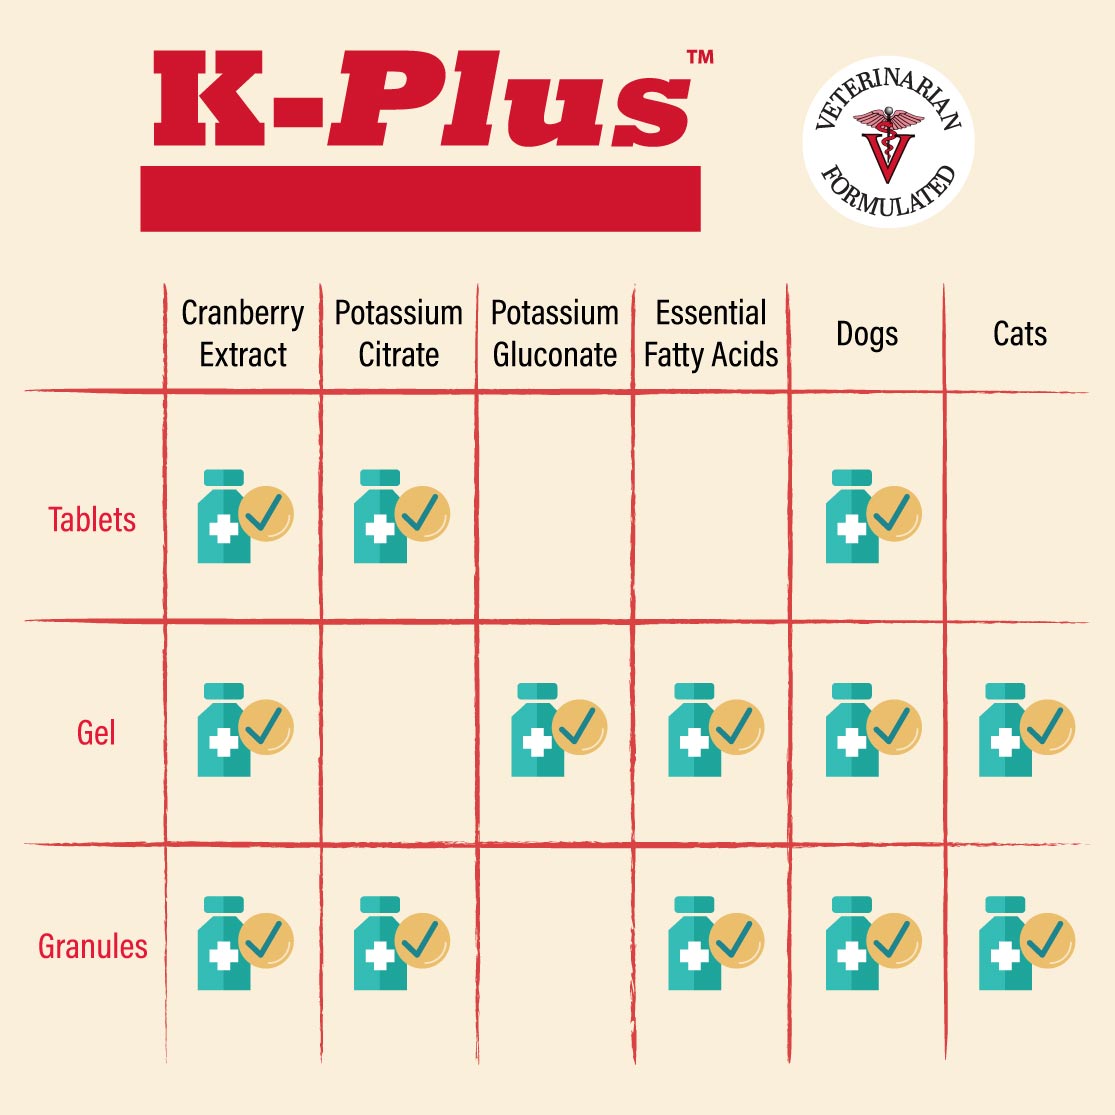 K-Plus Tablets, Gel, and Granules table.